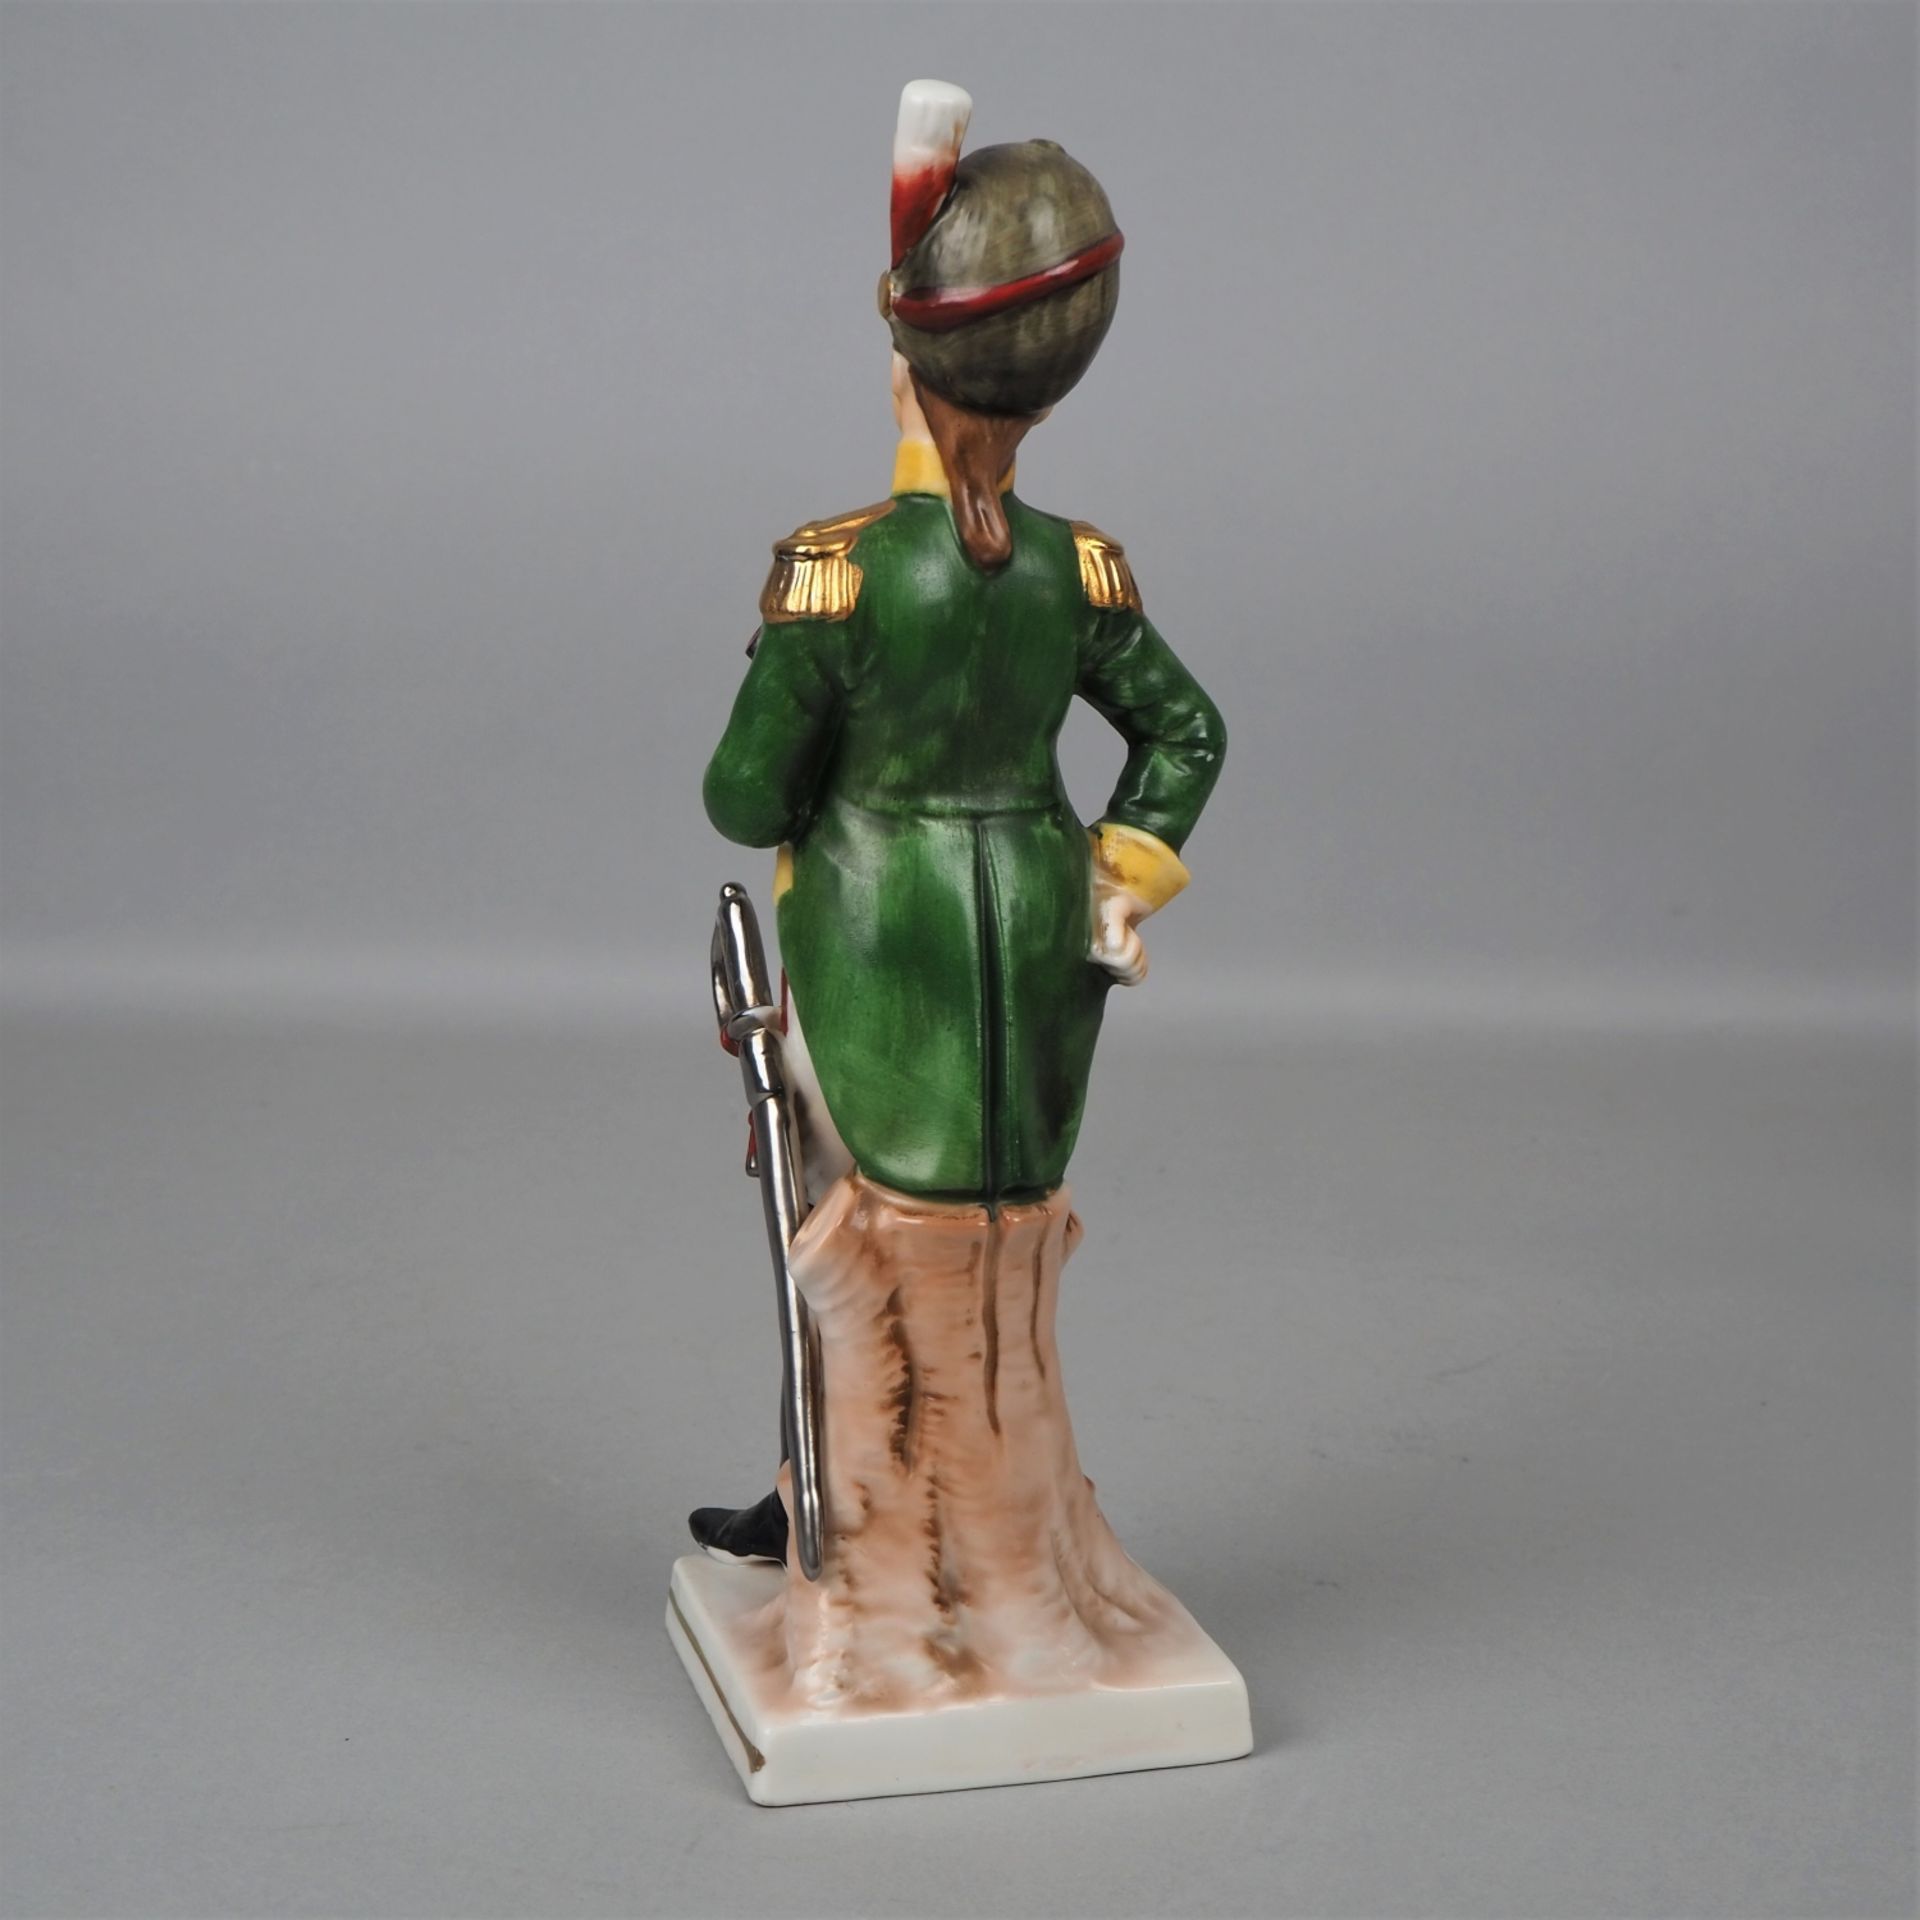 Konvolut Soldaten Porzellanfiguren in Uniform, 20. Jh.  - Bild 6 aus 6